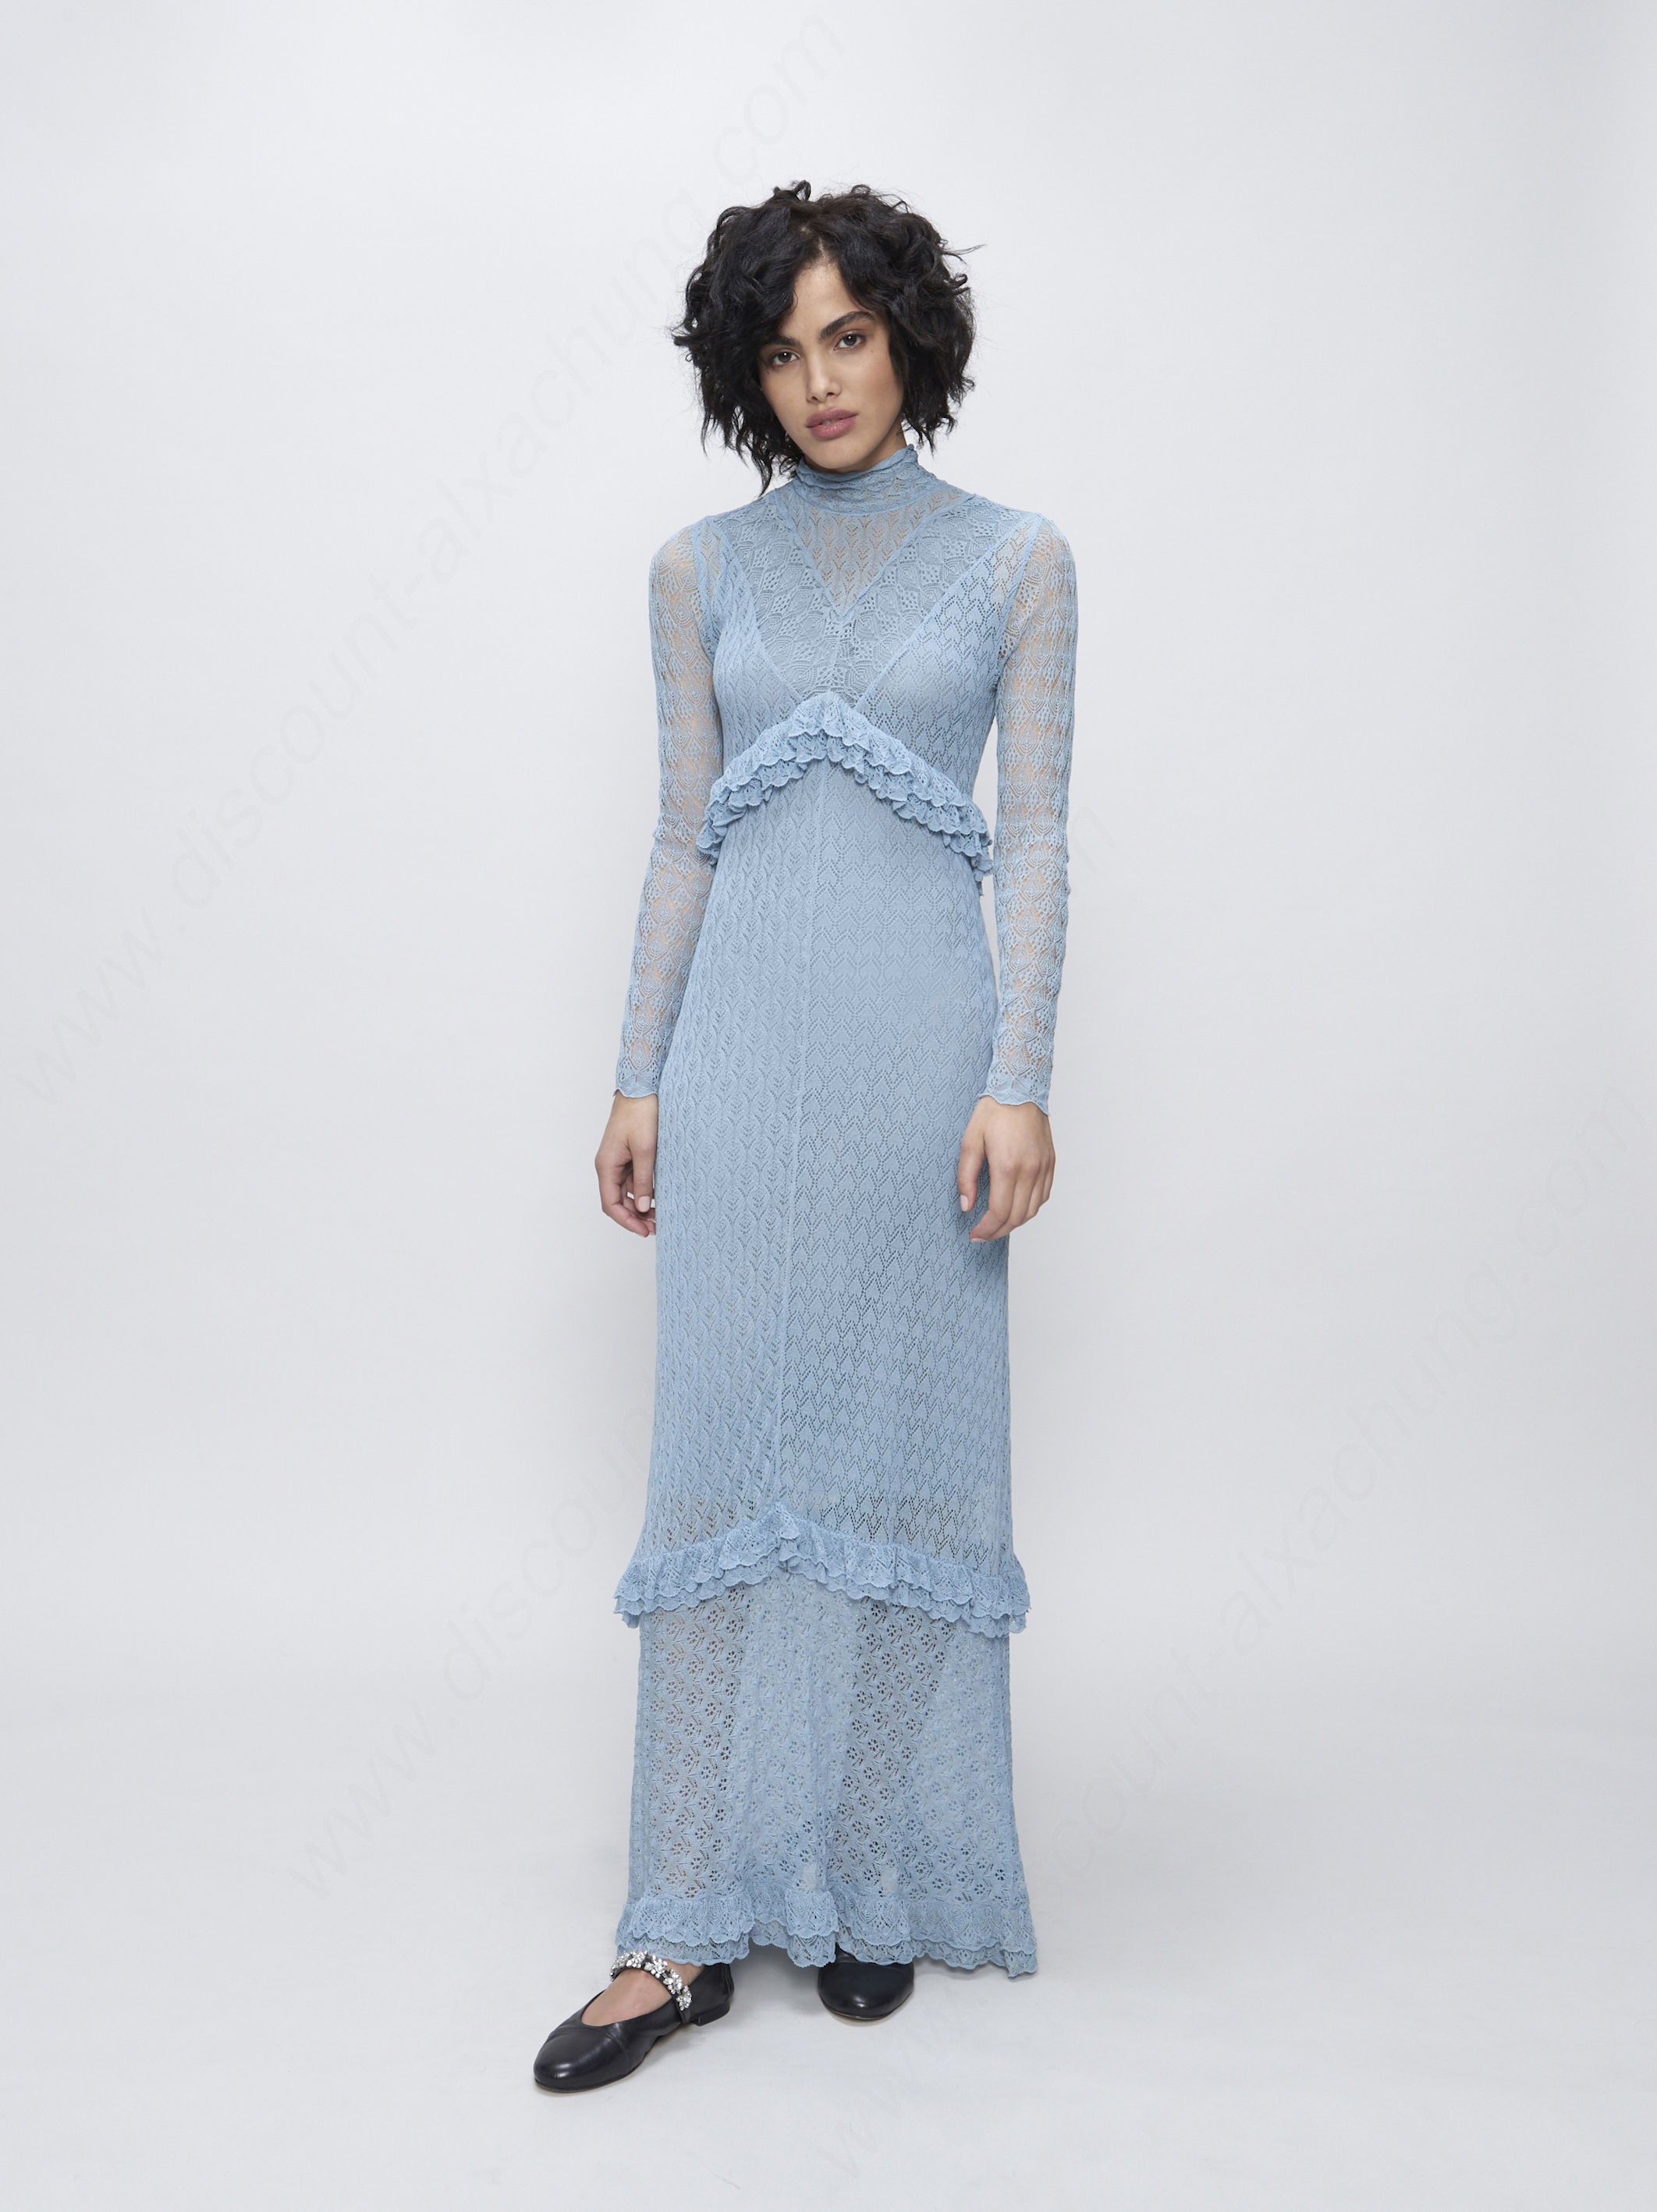 Alexachung Patchwork Fine Knit Lace Dress - Alexachung Patchwork Fine Knit Lace Dress